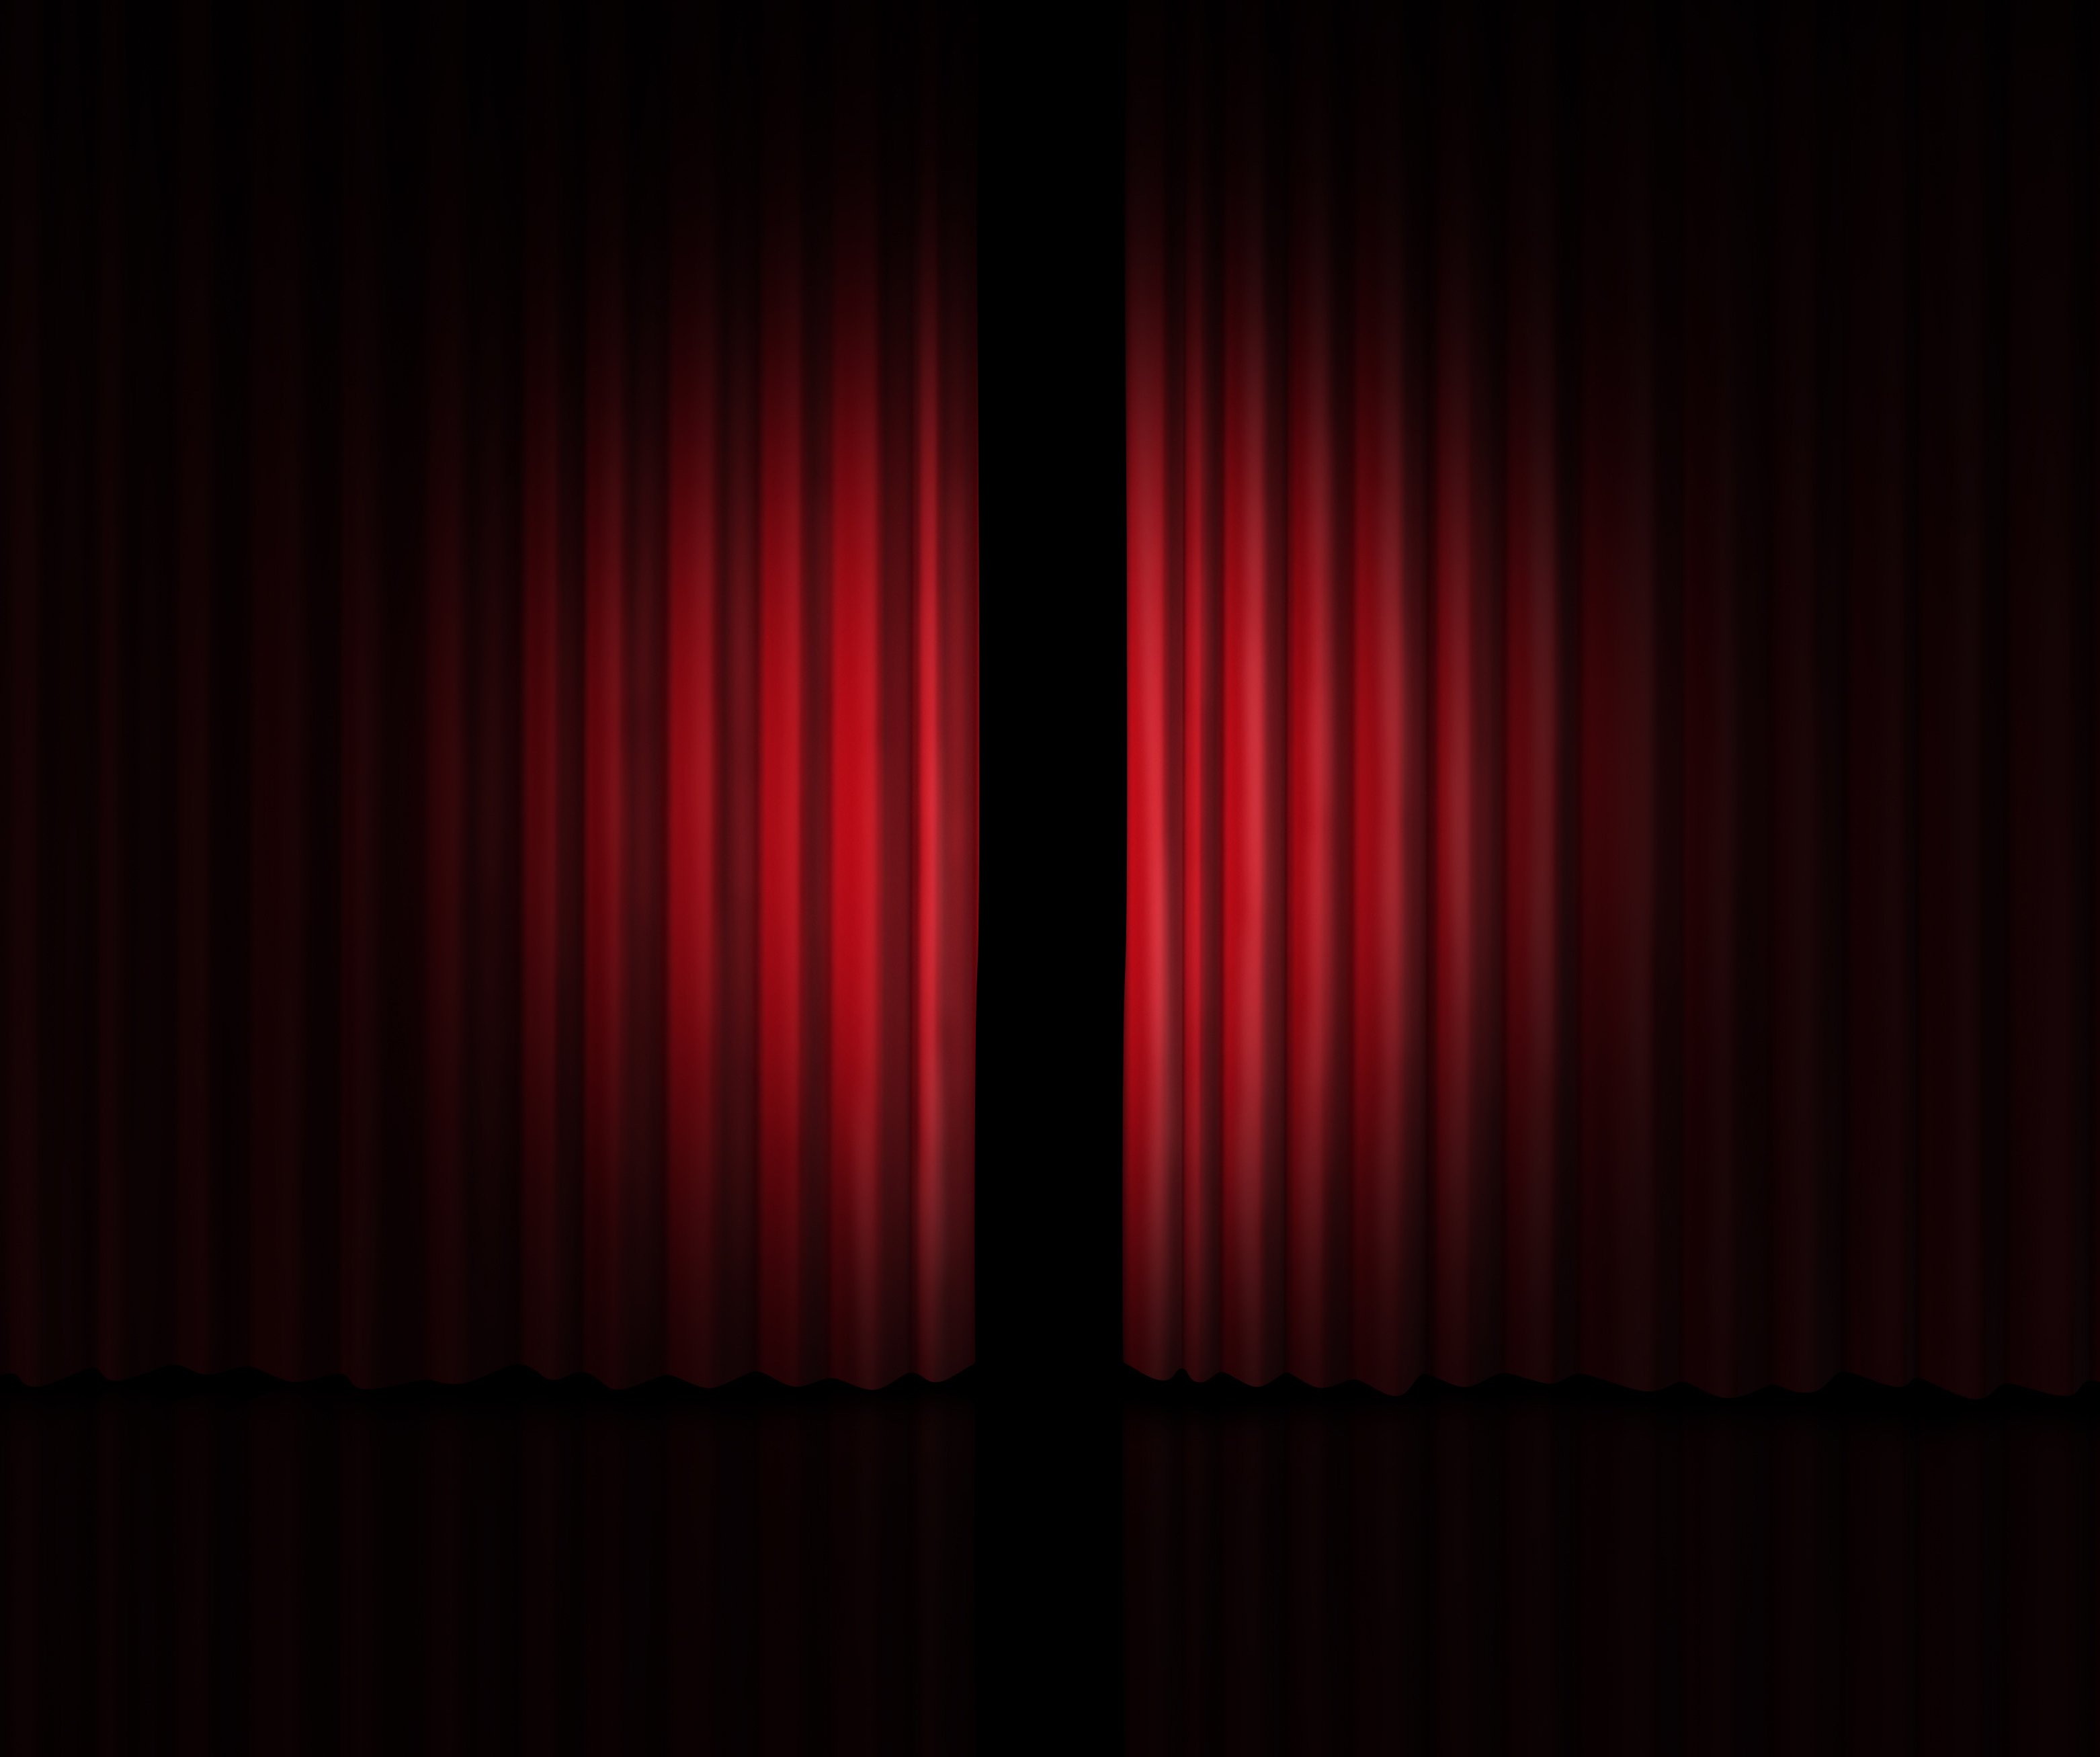 Theatre curtain | Source: Shutterstock